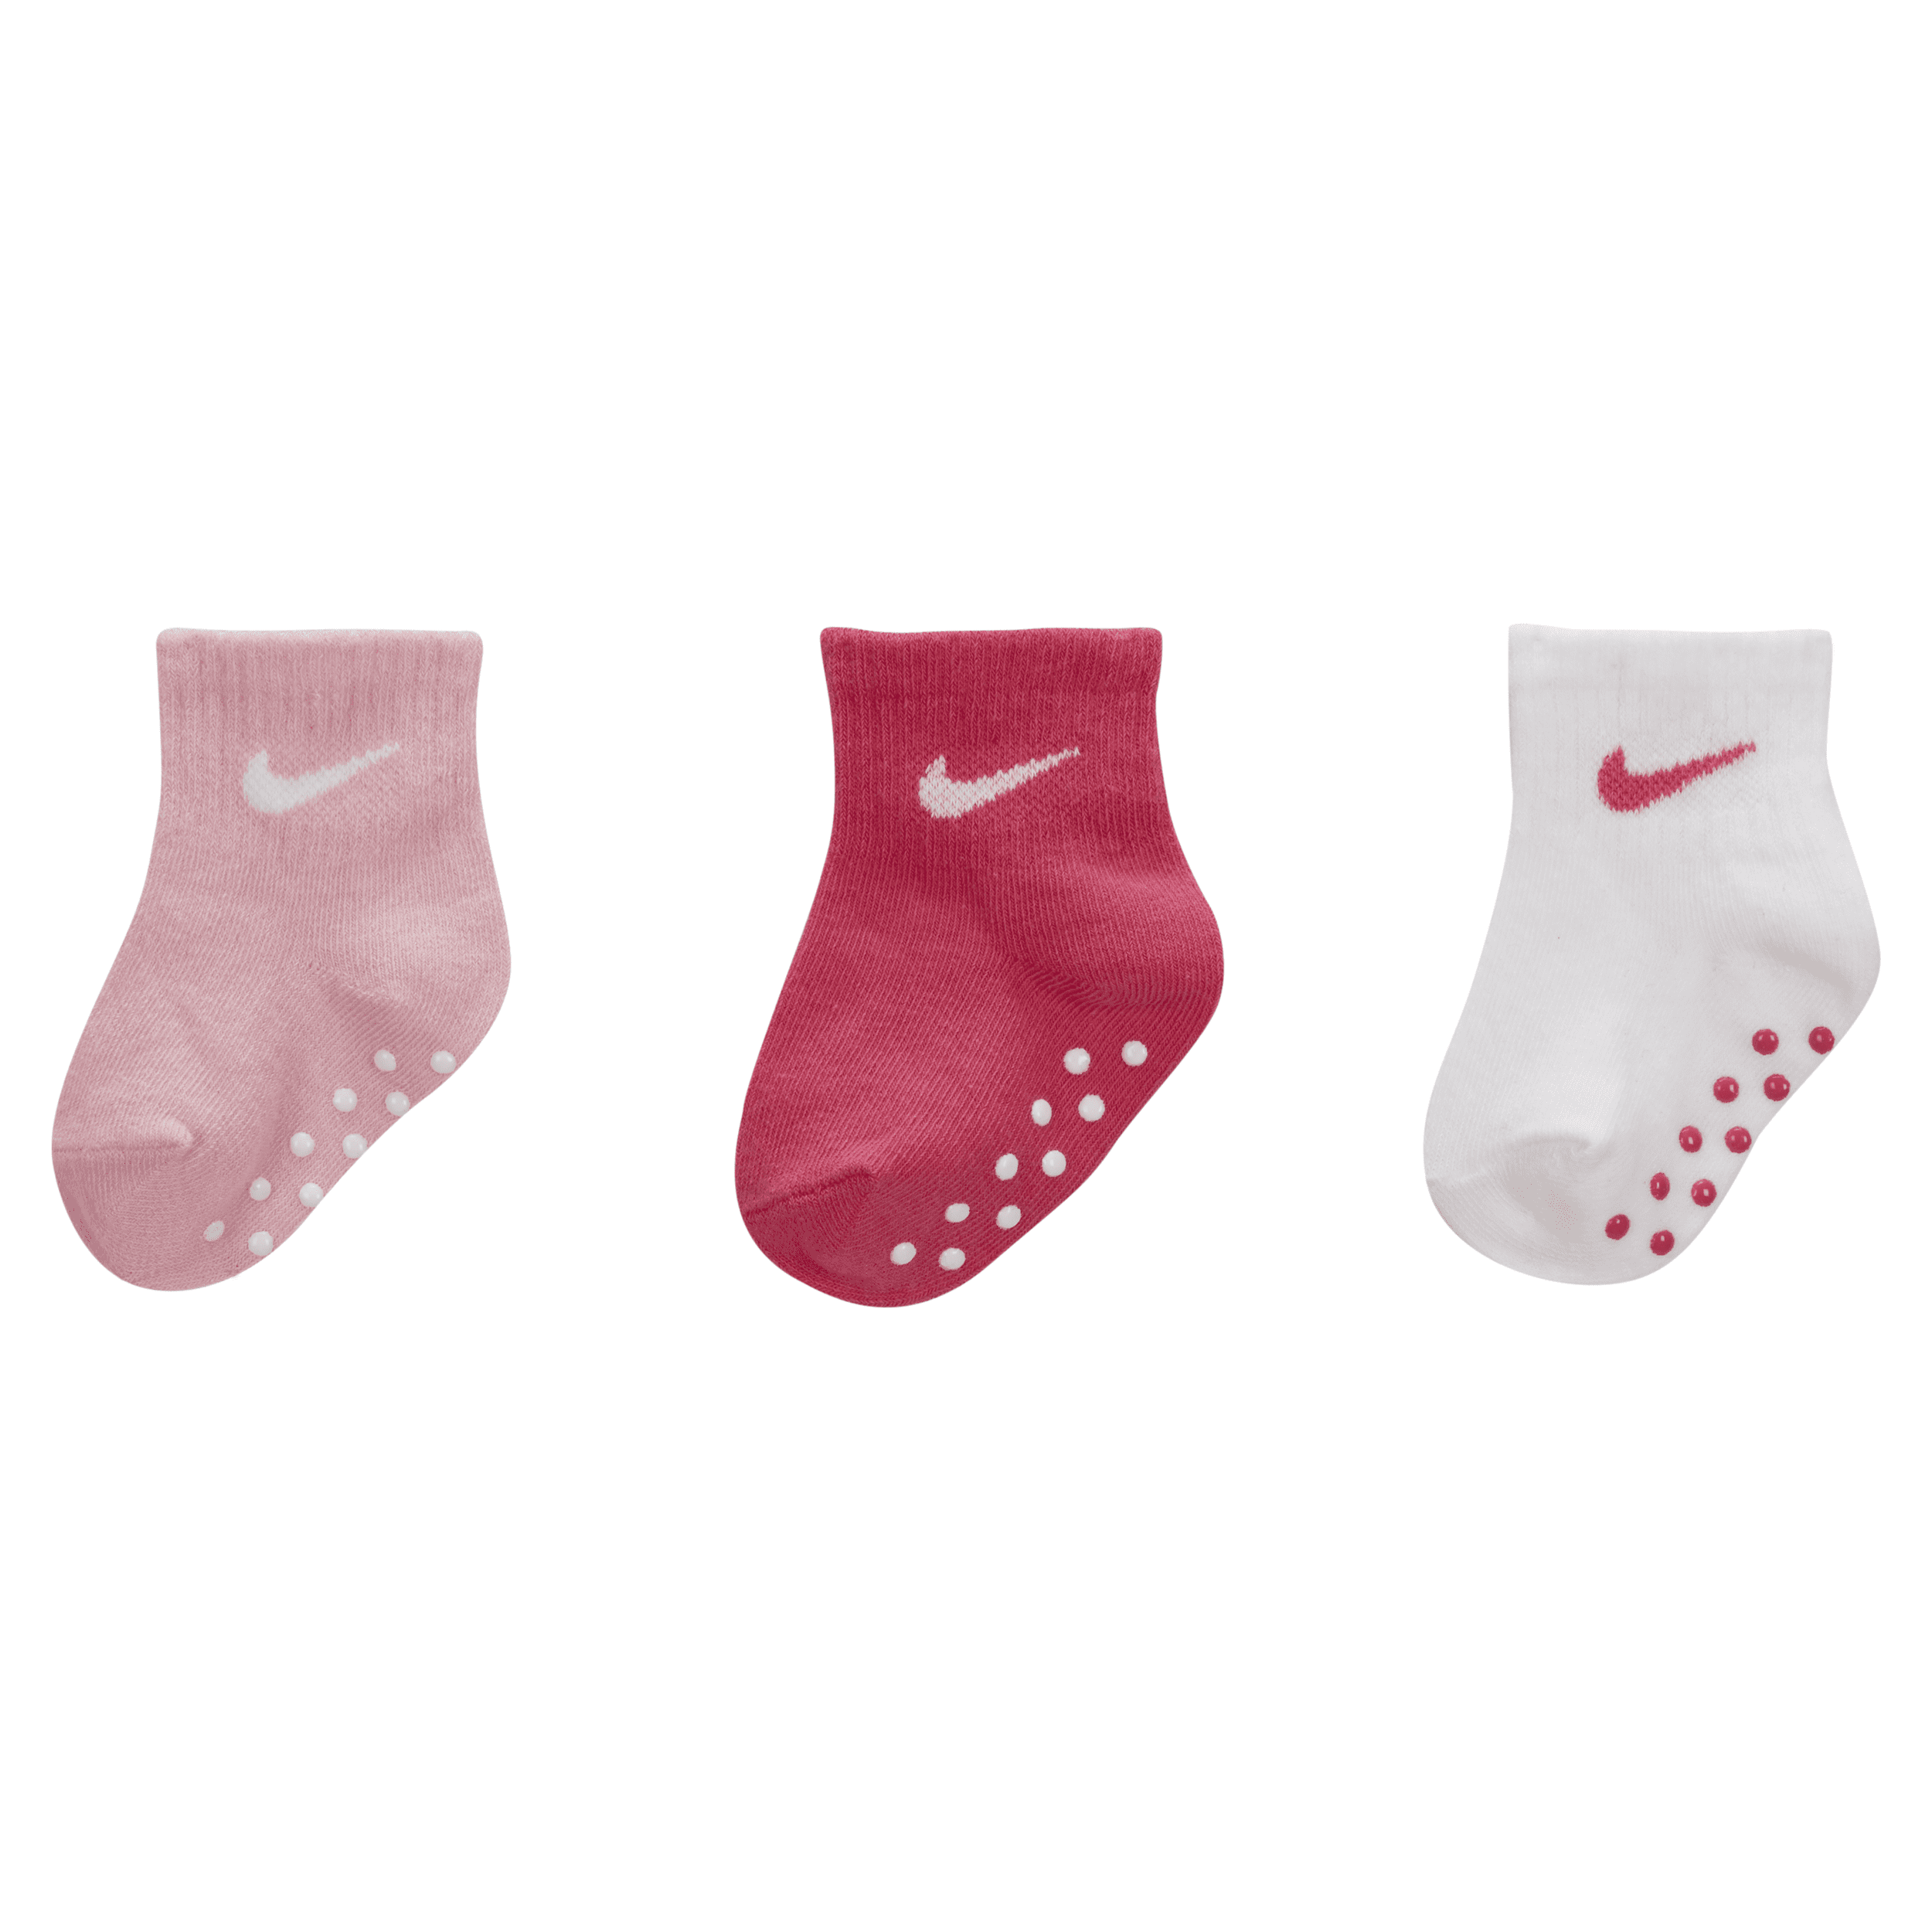 Nike Baby (6-12m) Gripper Ankle Socks (3 Pairs) In Pink